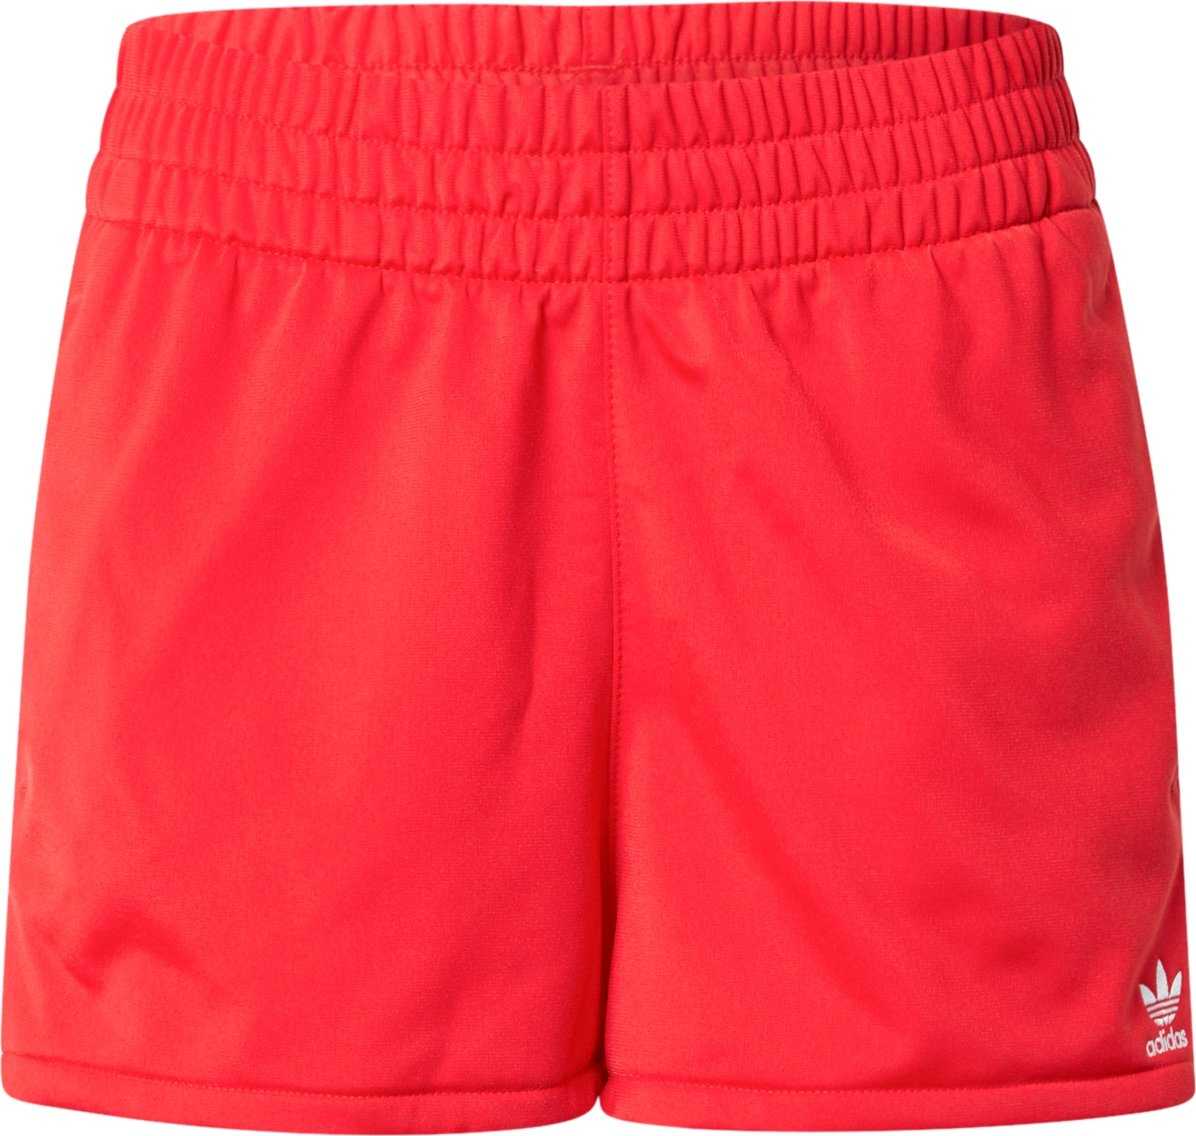 ADIDAS ORIGINALS Kalhoty oranžově červená / bílá